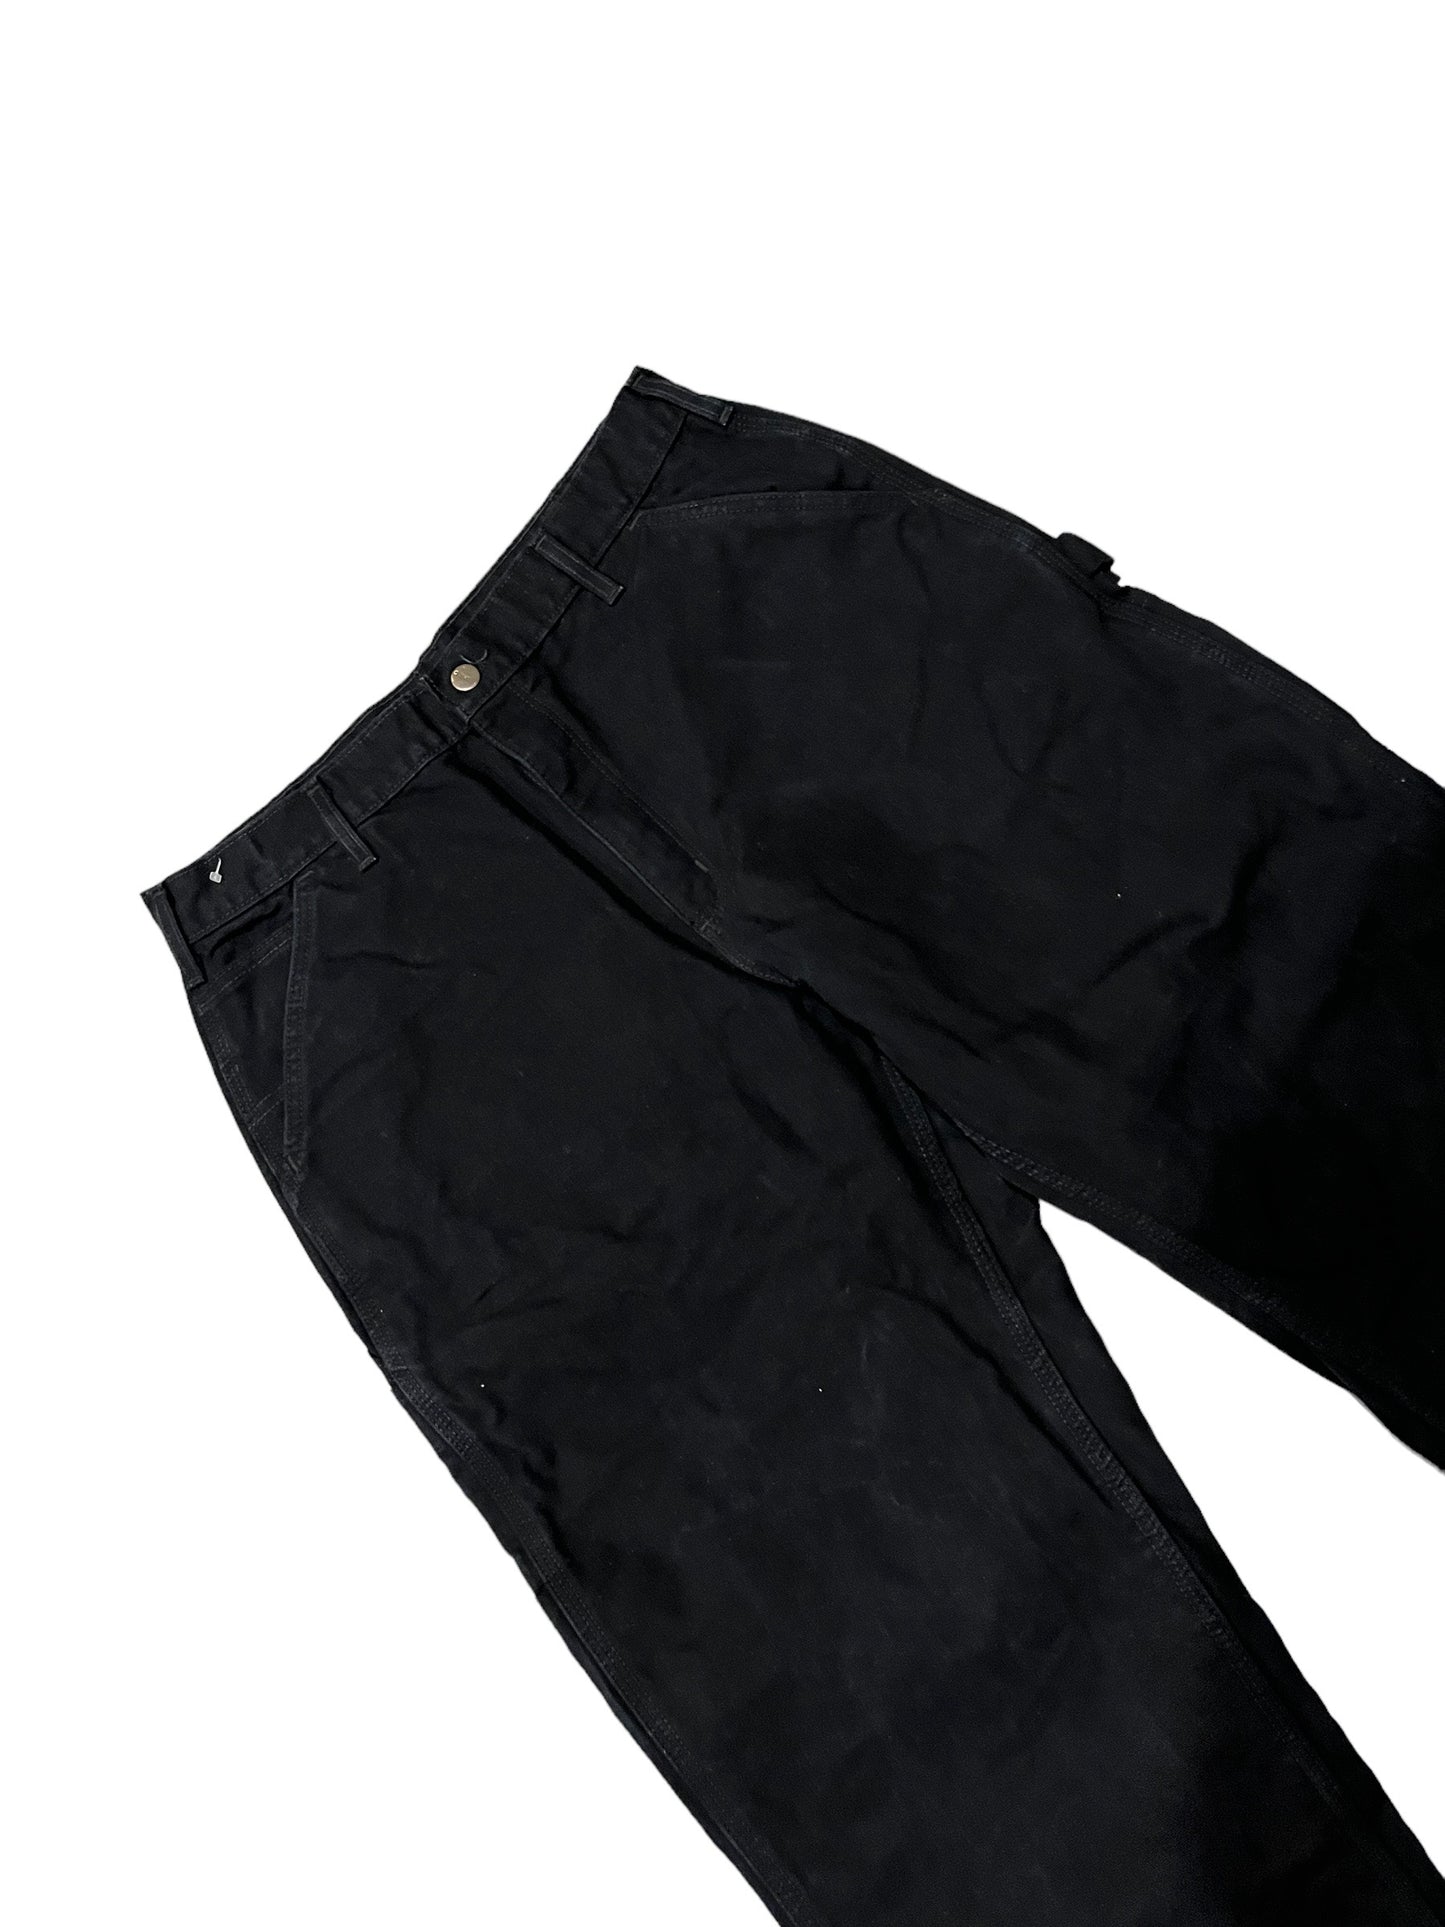 Vintage Carhartt Relaxed Pants - Black